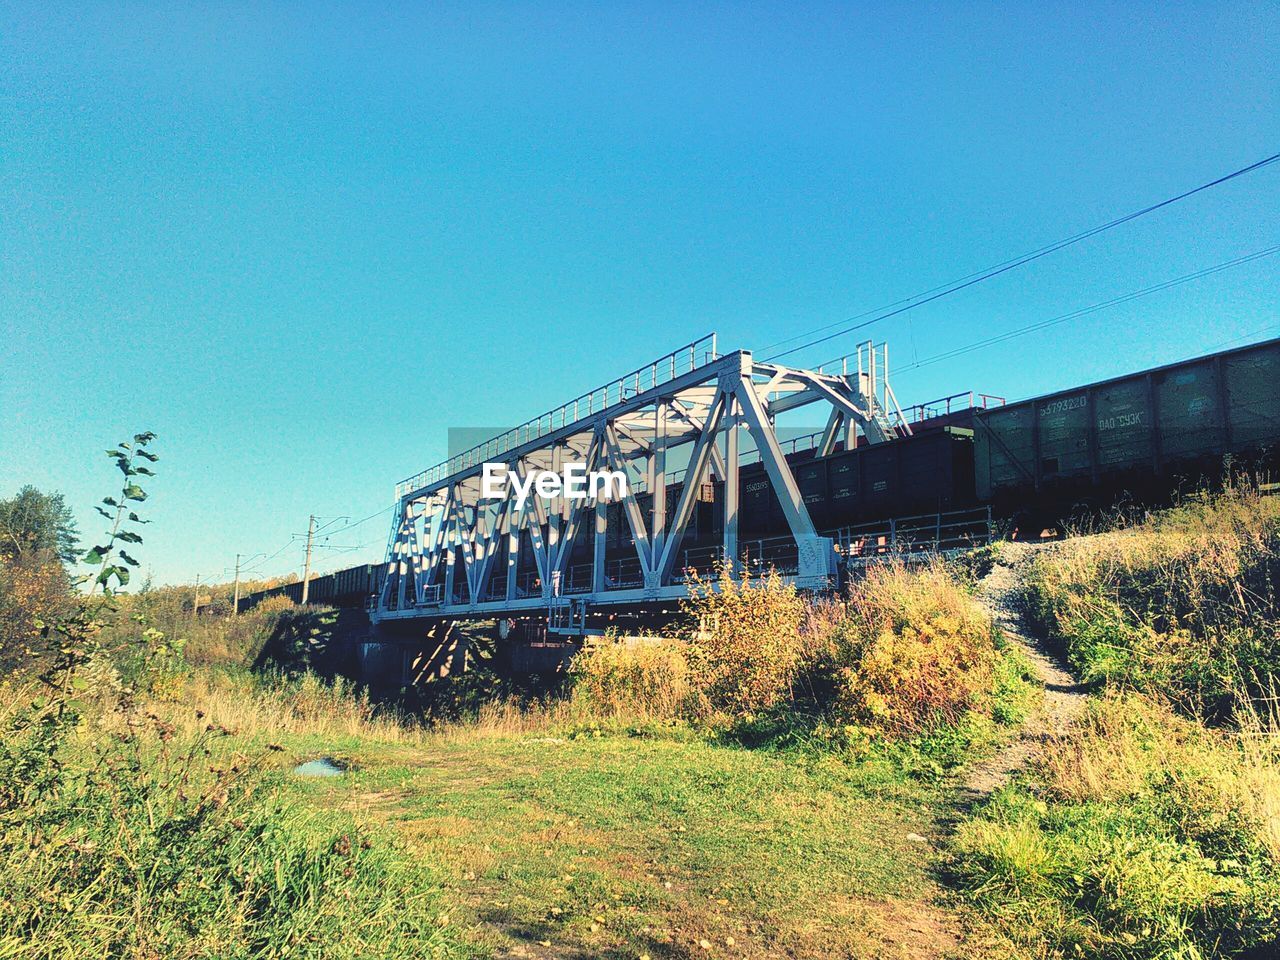 Train on bridge against clear blue sky